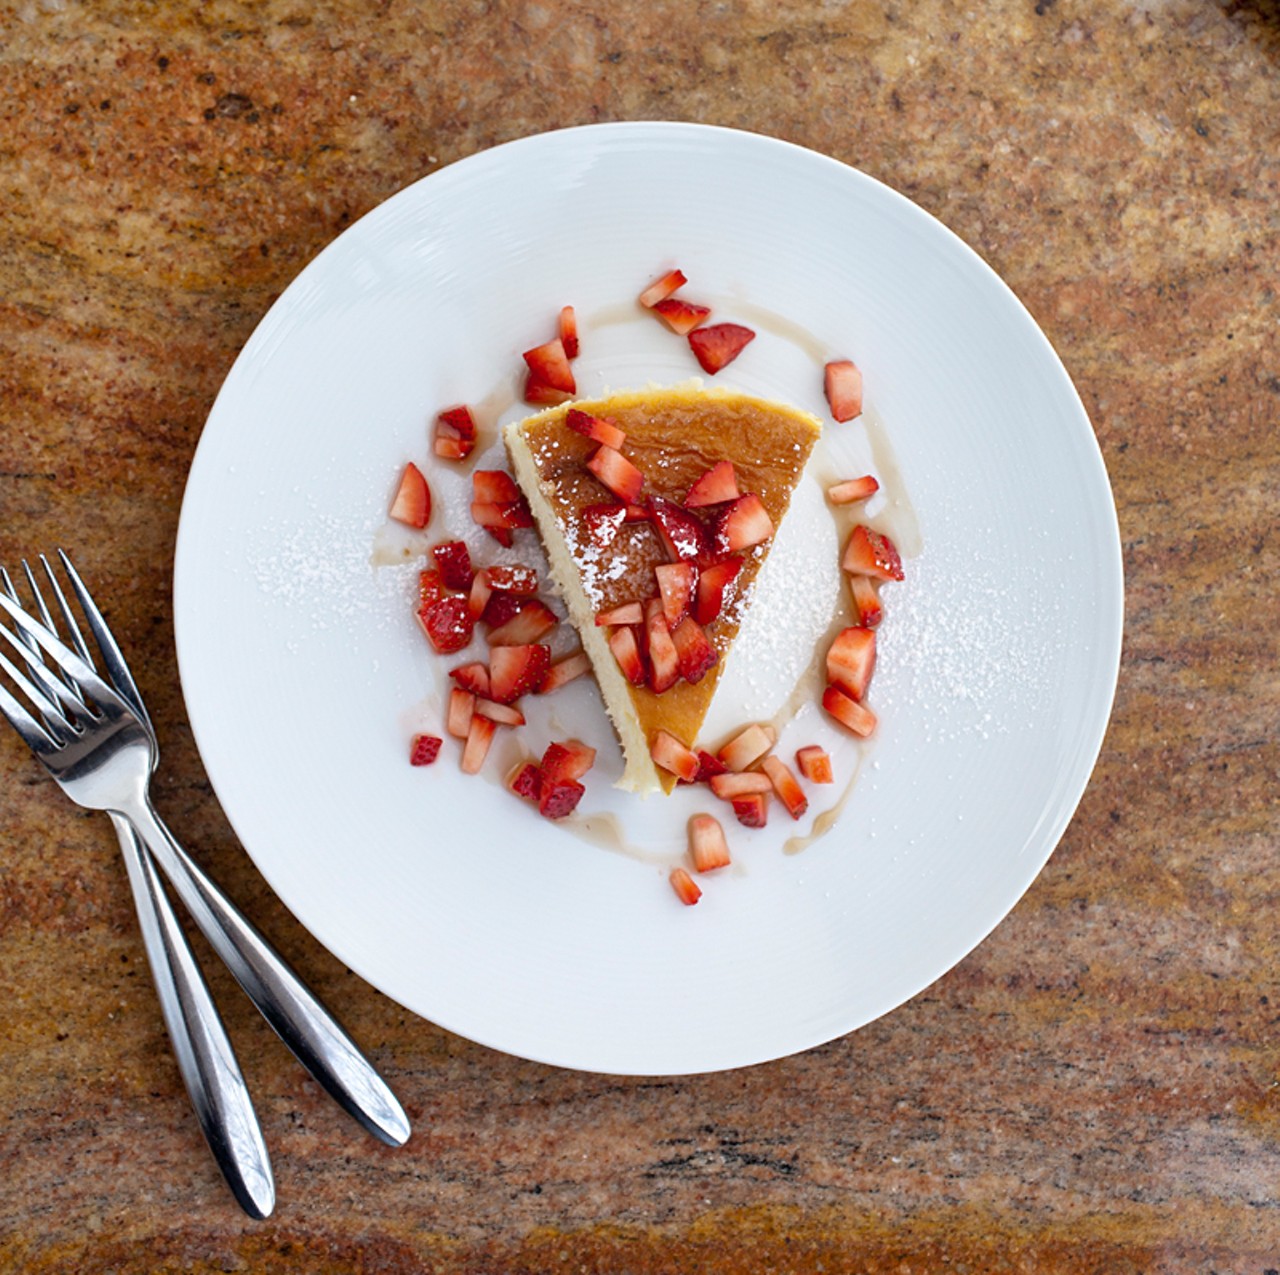 Mascarpone cheesecake with a biscotti crust and fresh balsamic strawberries.